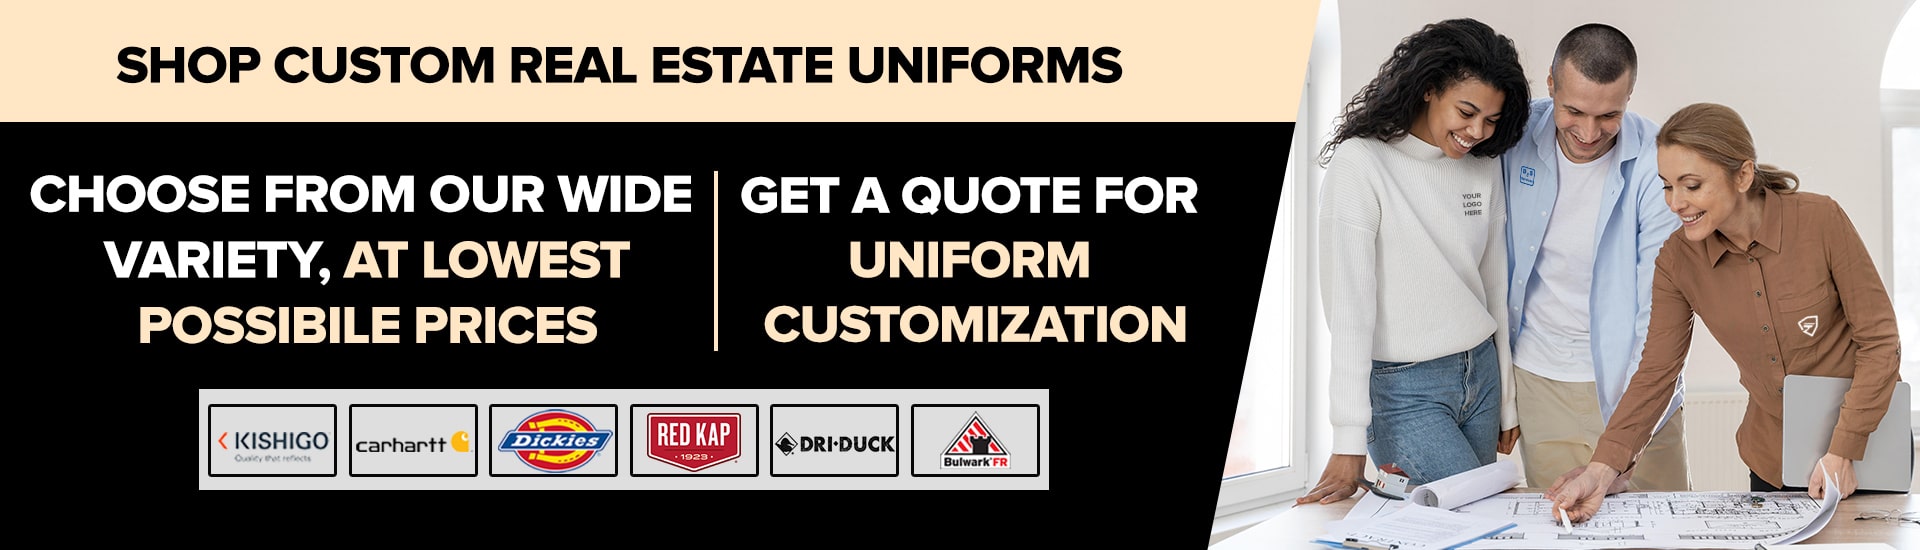 Shop Custom Real Estate Uniforms